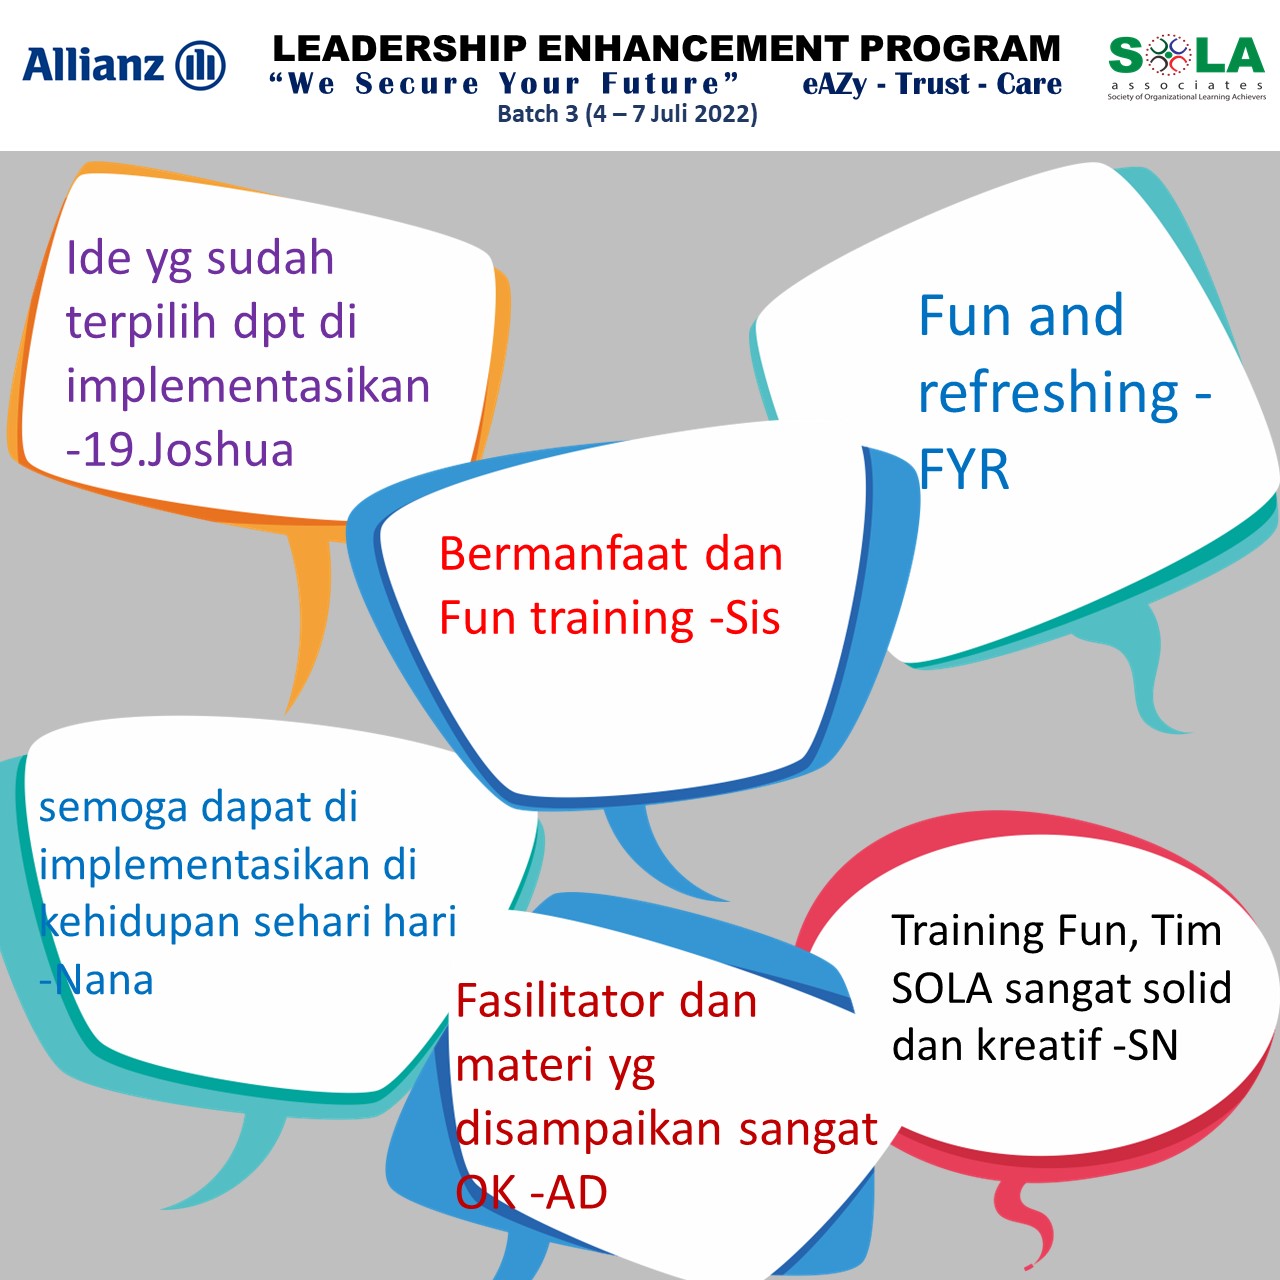 Leadership Enhancement Program AllianzU Batch 3-4